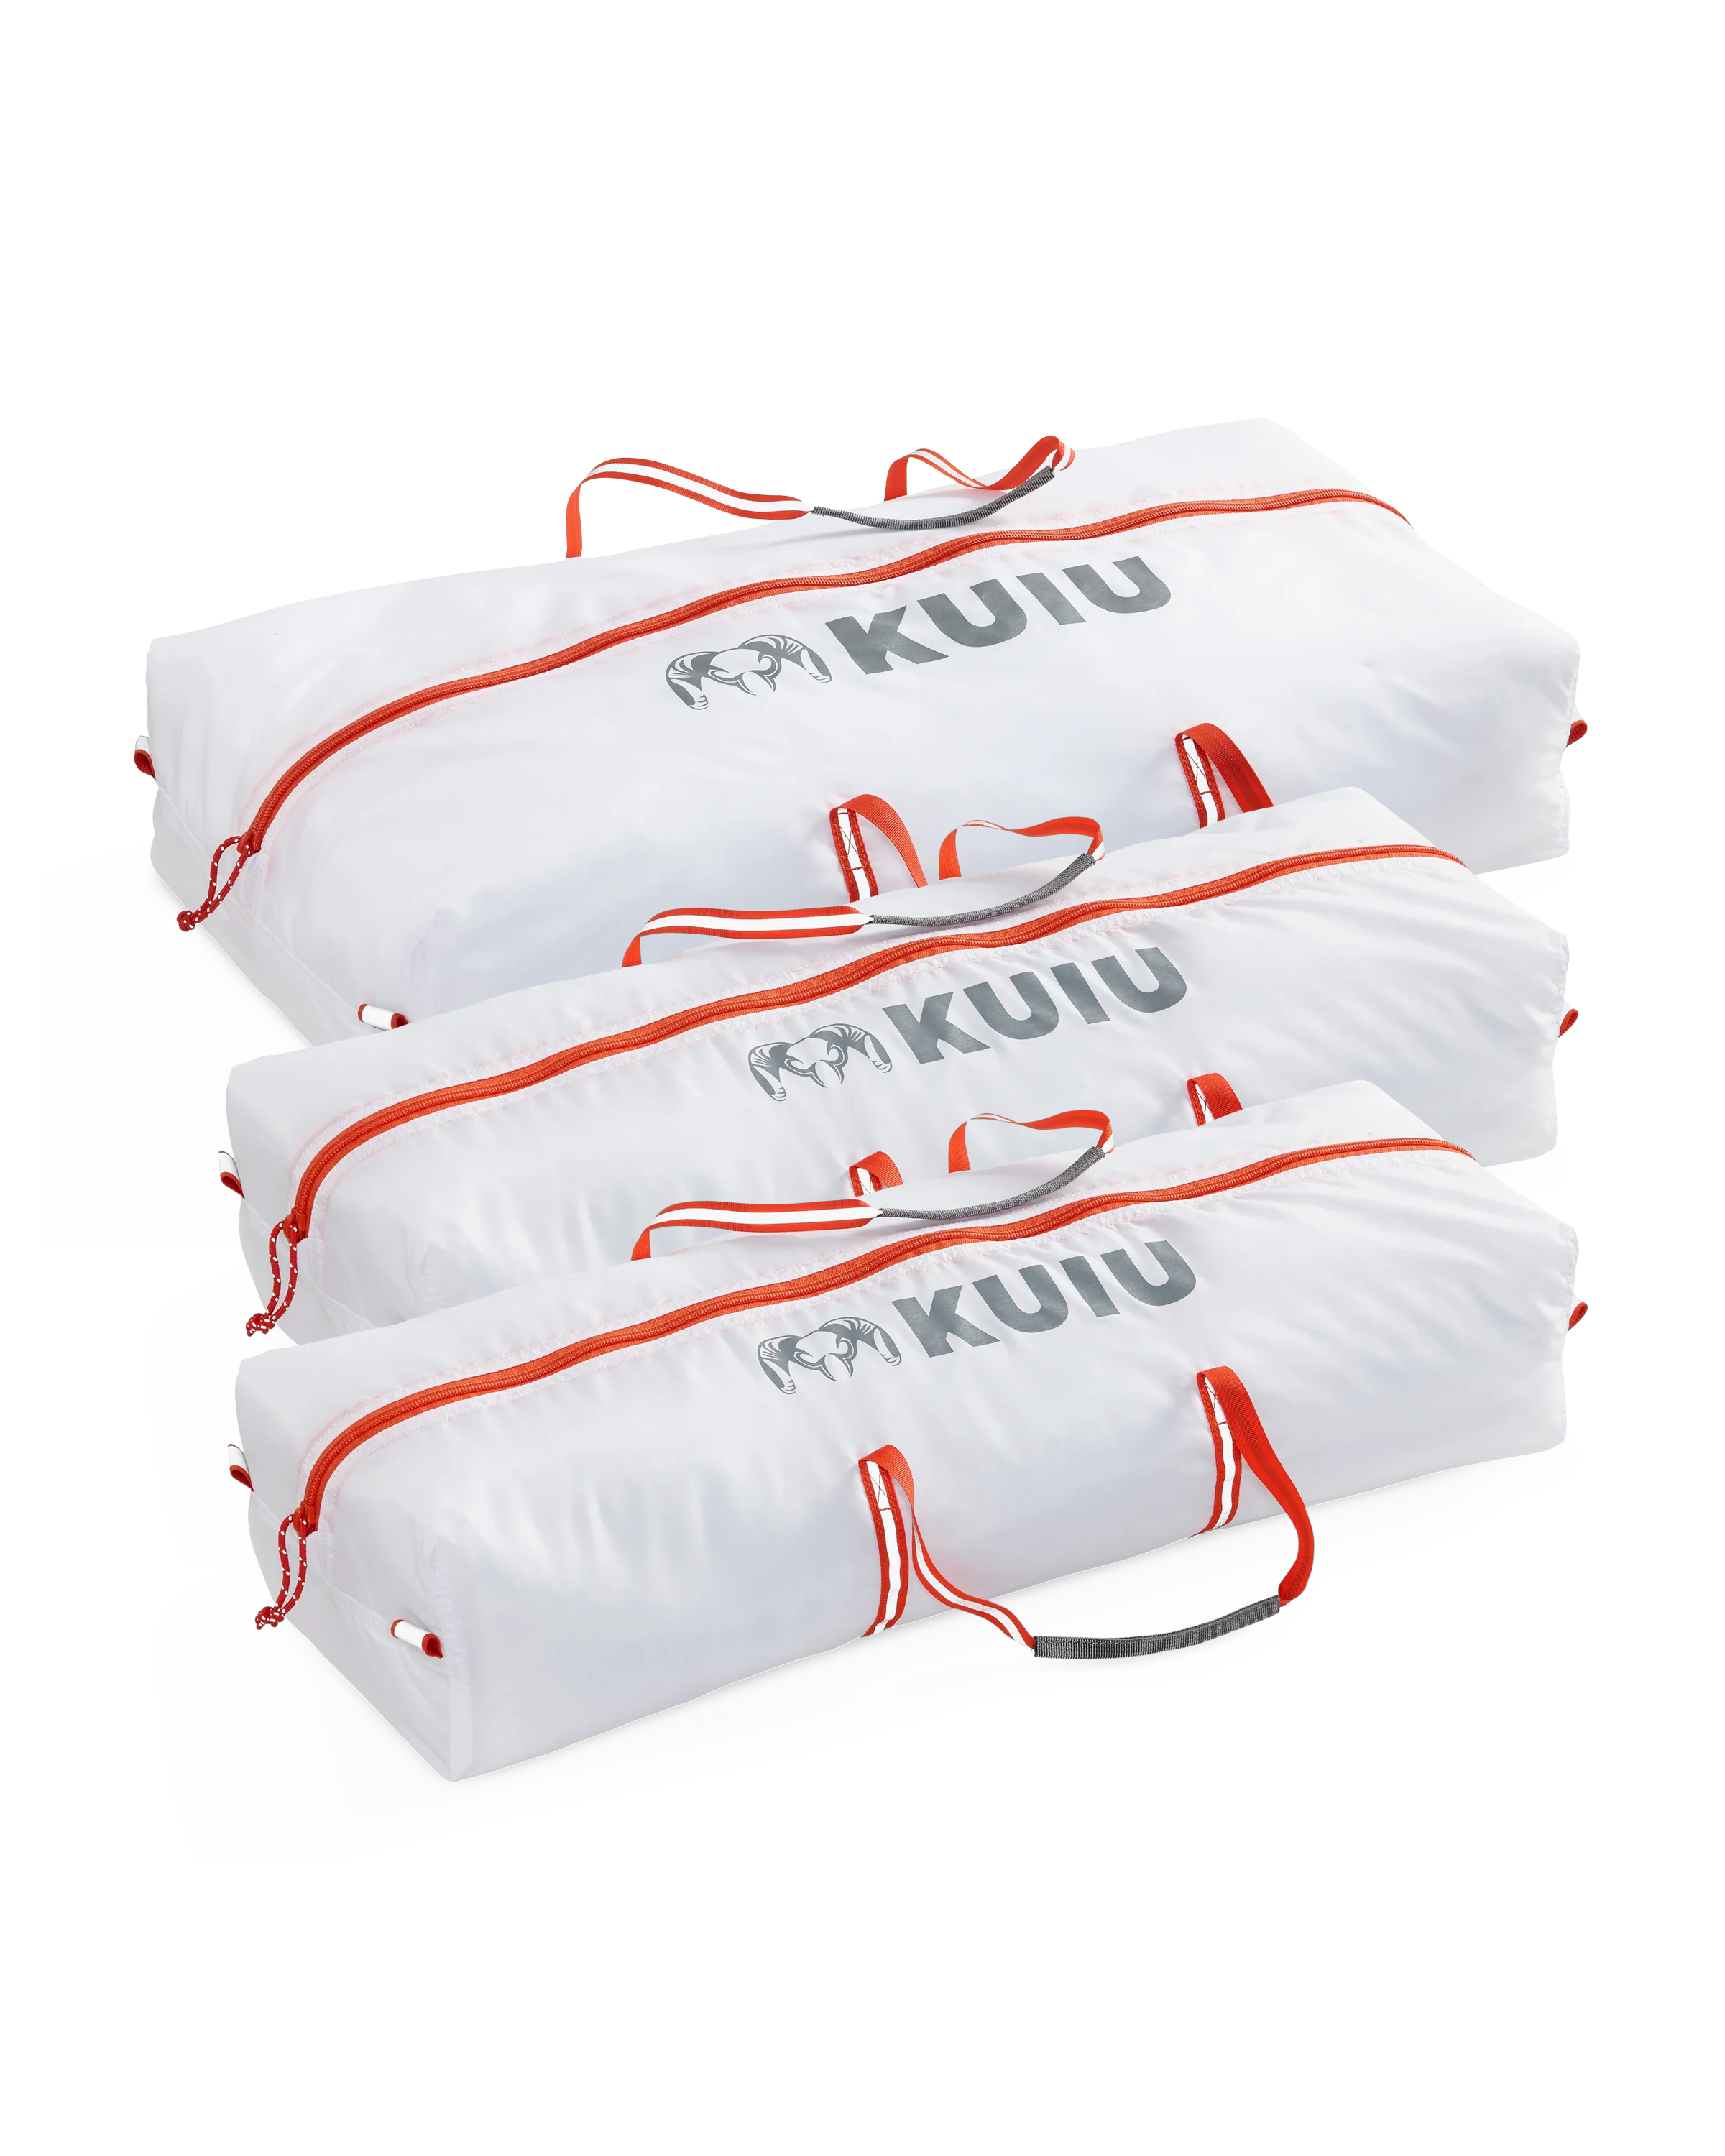 KUIU Boned-Out Game Bag Set in White